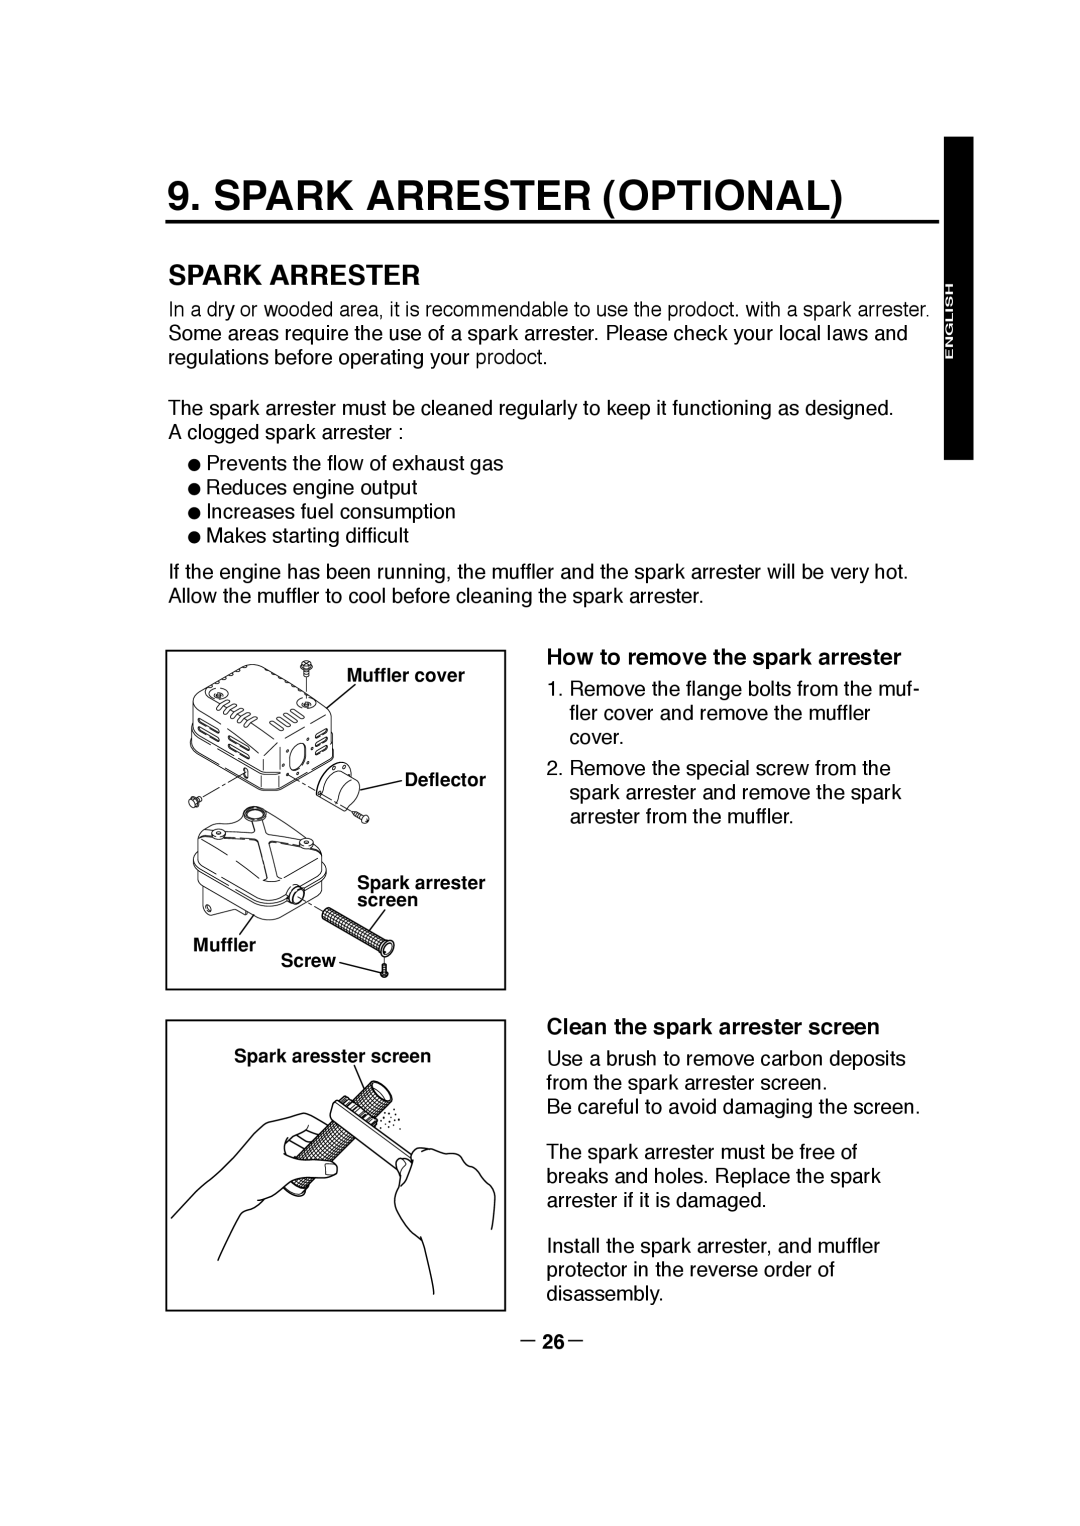 Makita EW220R, EW320TR Spark Arrester Optional, － 26－, How to remove the spark arrester, Clean the spark arrester screen 